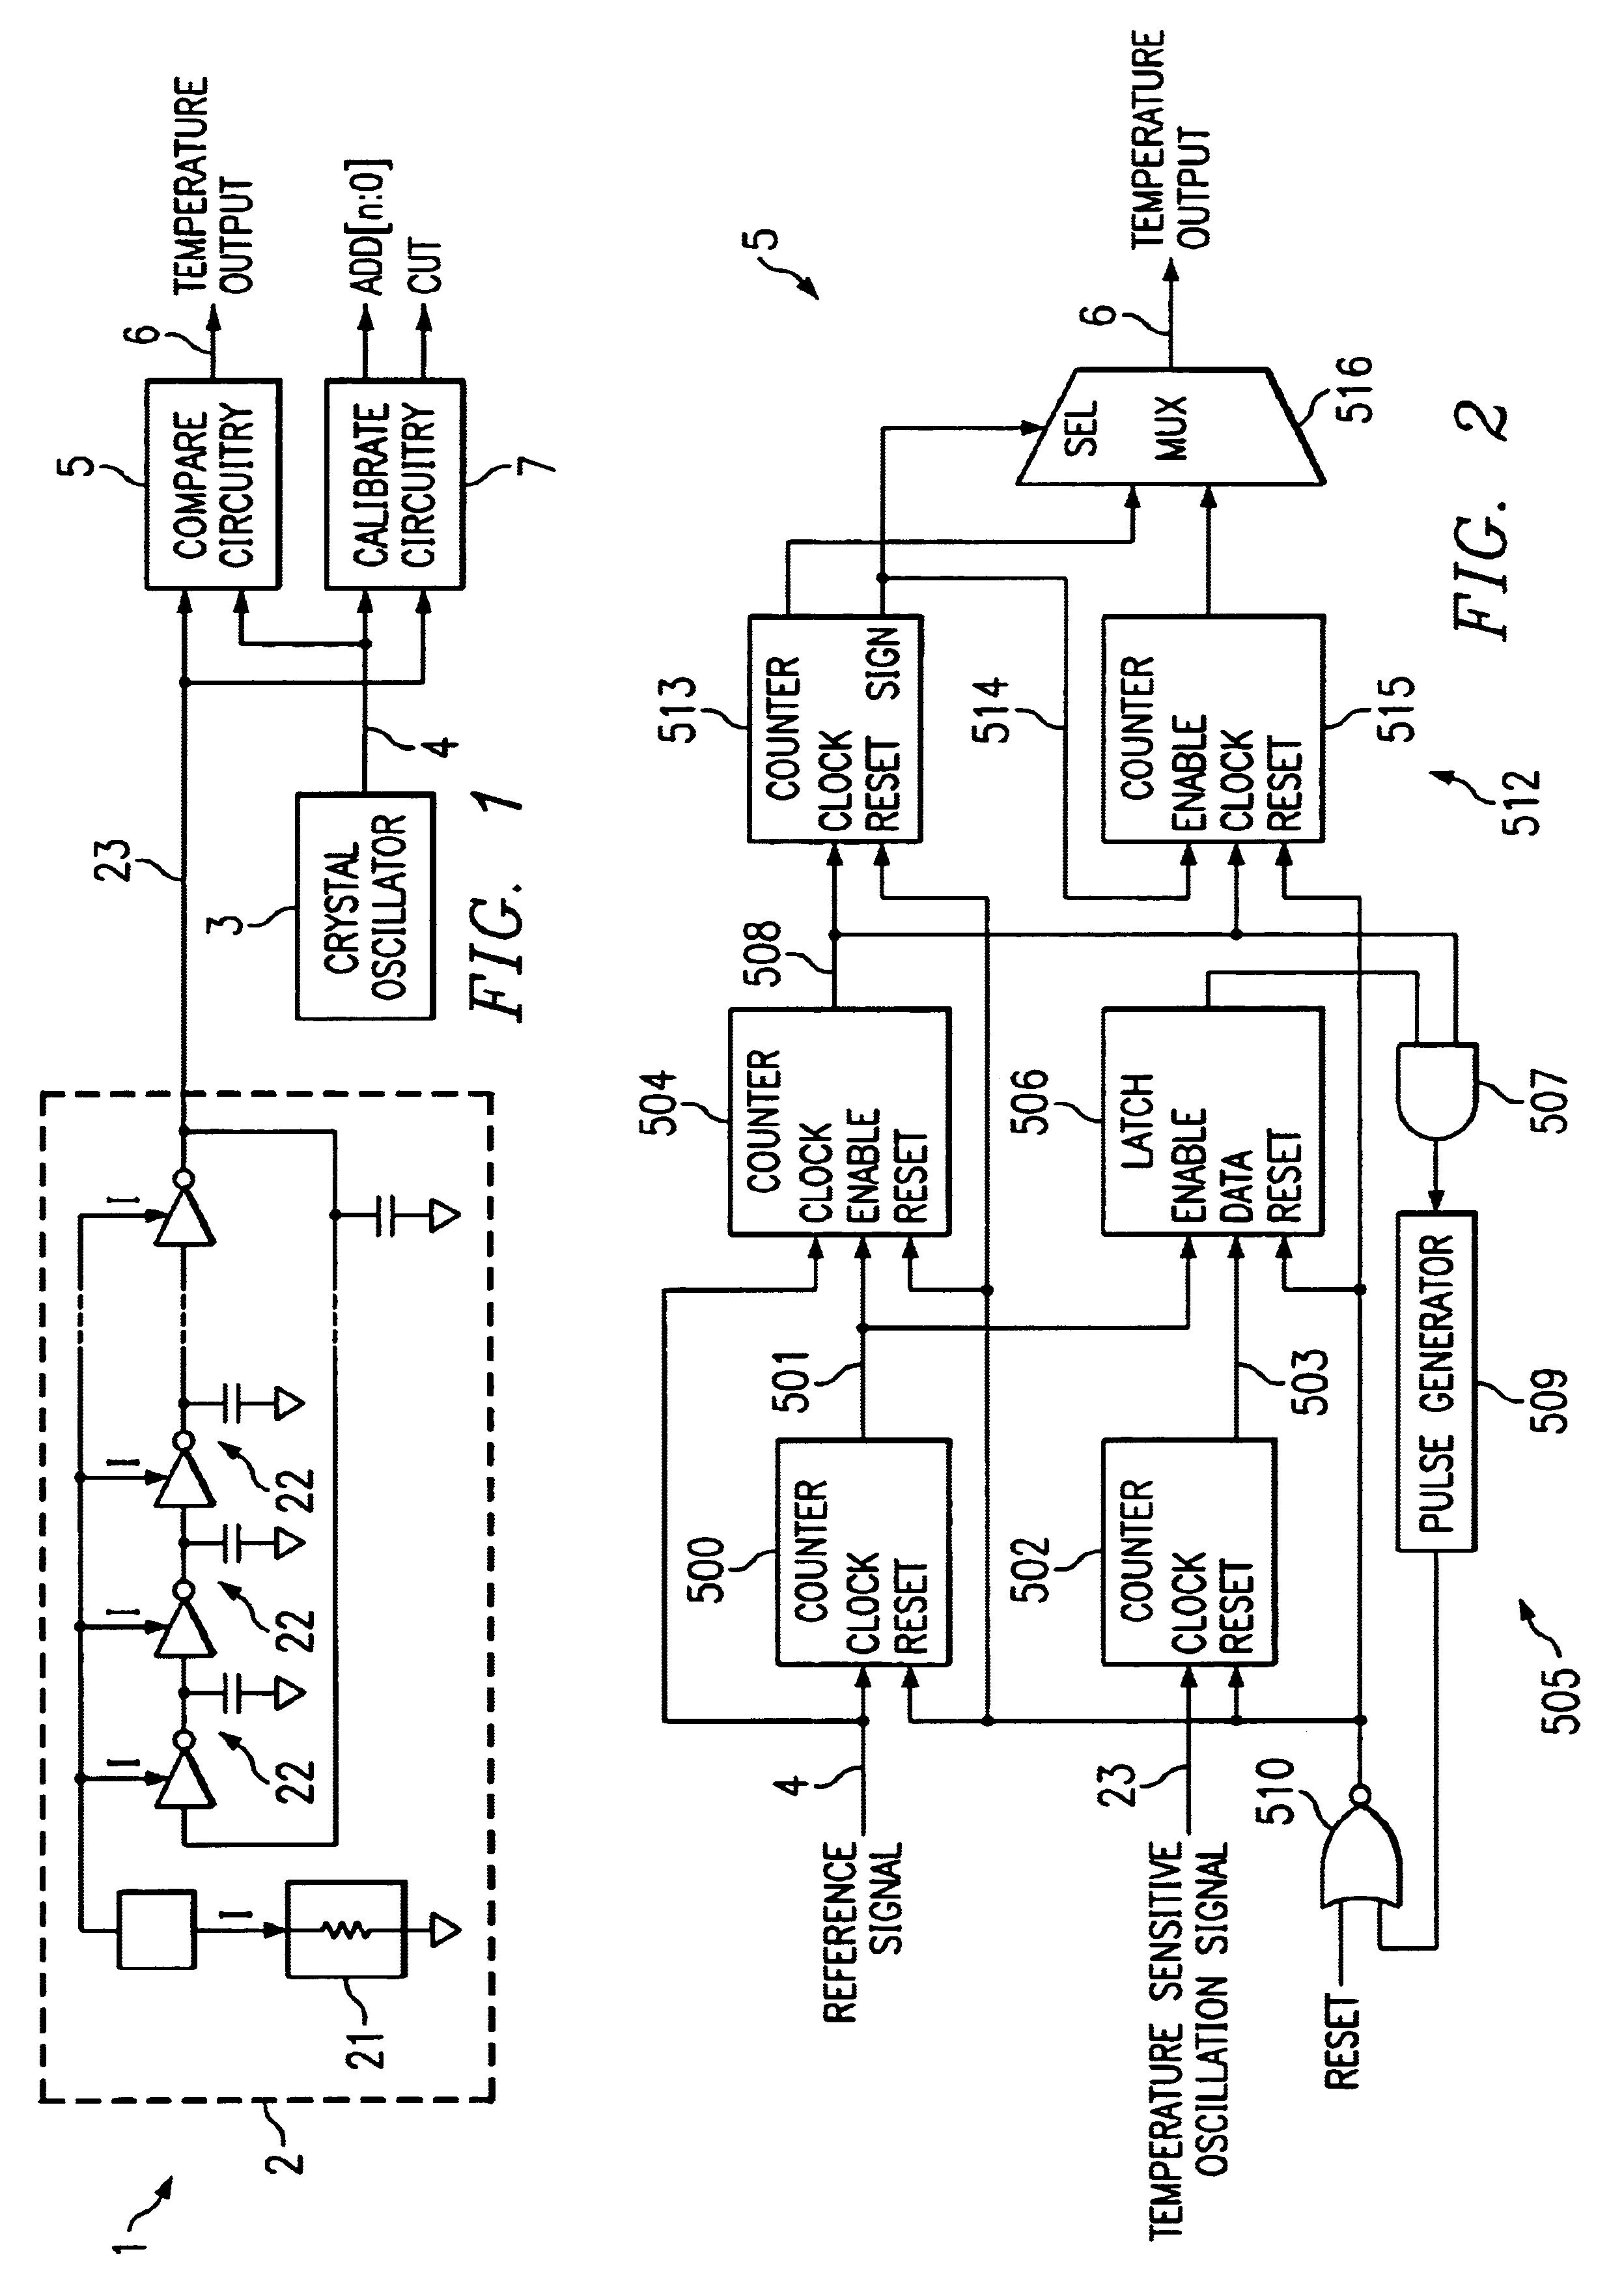 Temperature sensing circuit and method